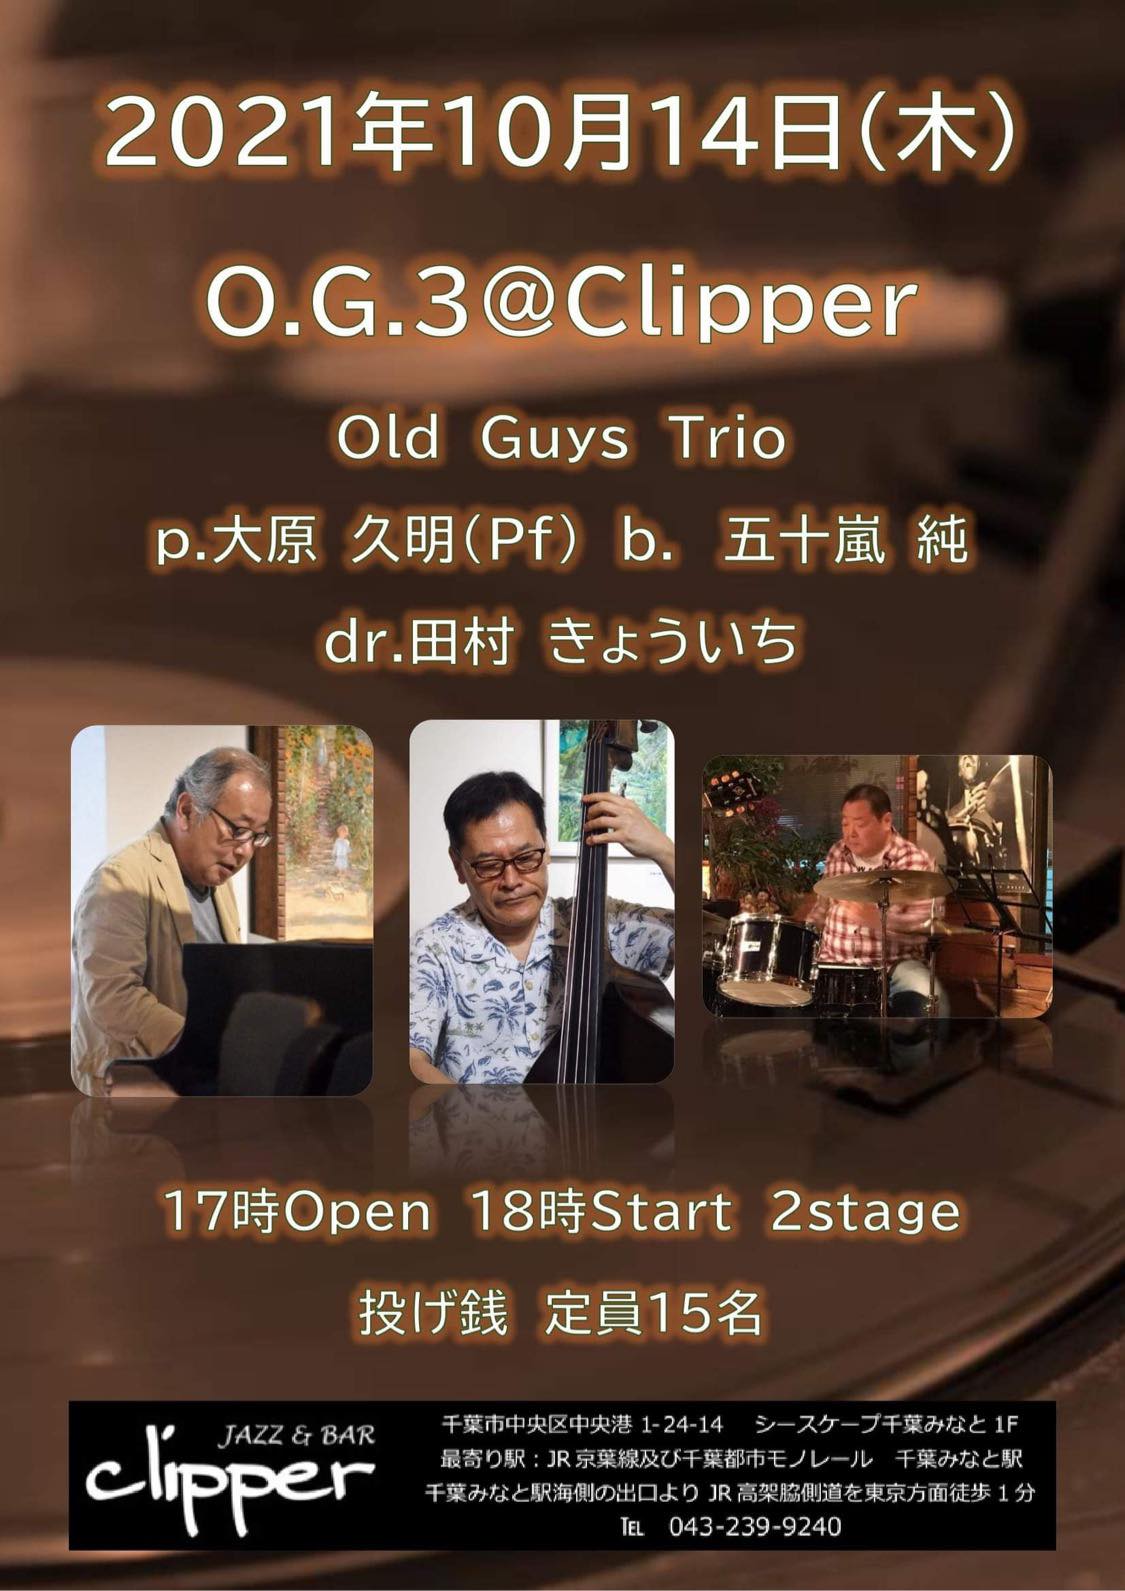 Old Guys trio (O.G.3)